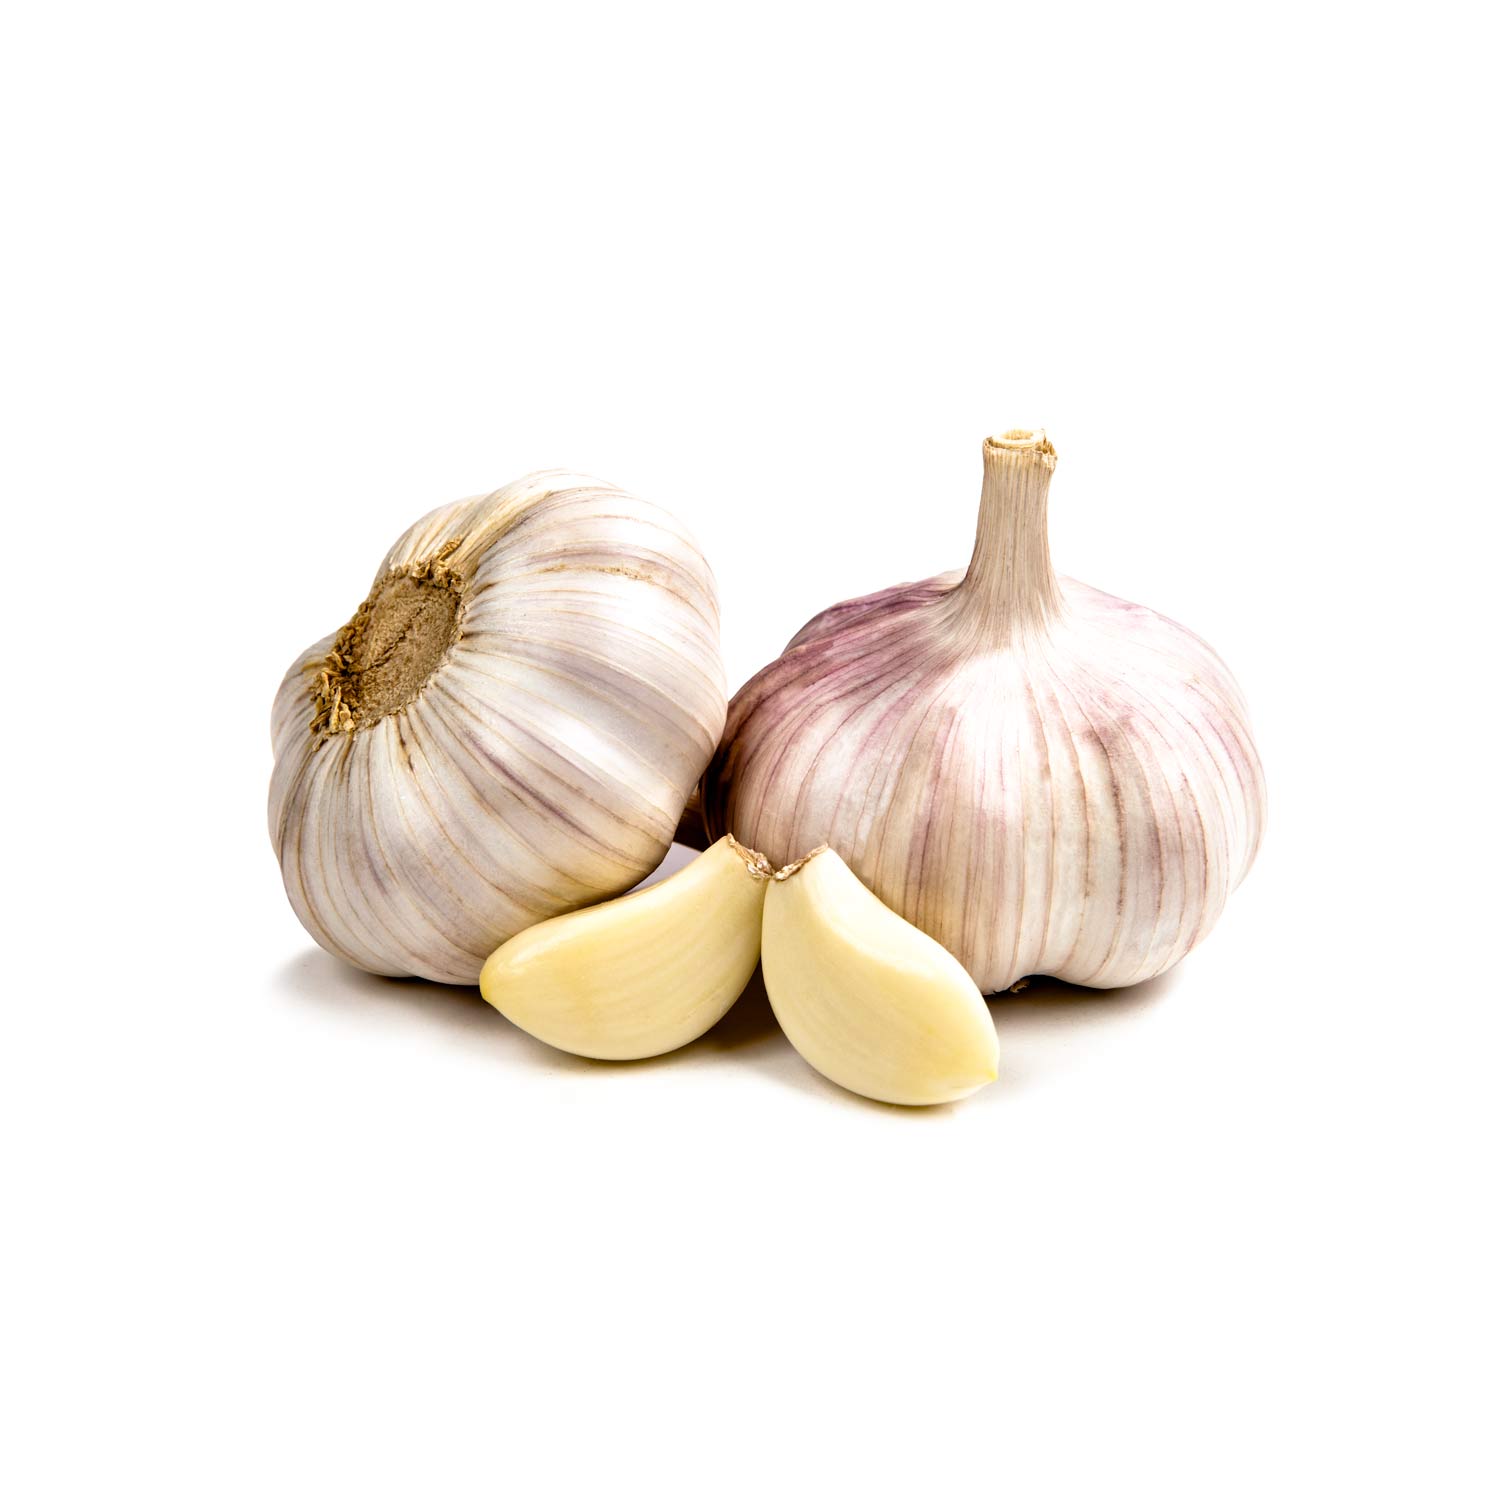 Garlic - Vegetables Category